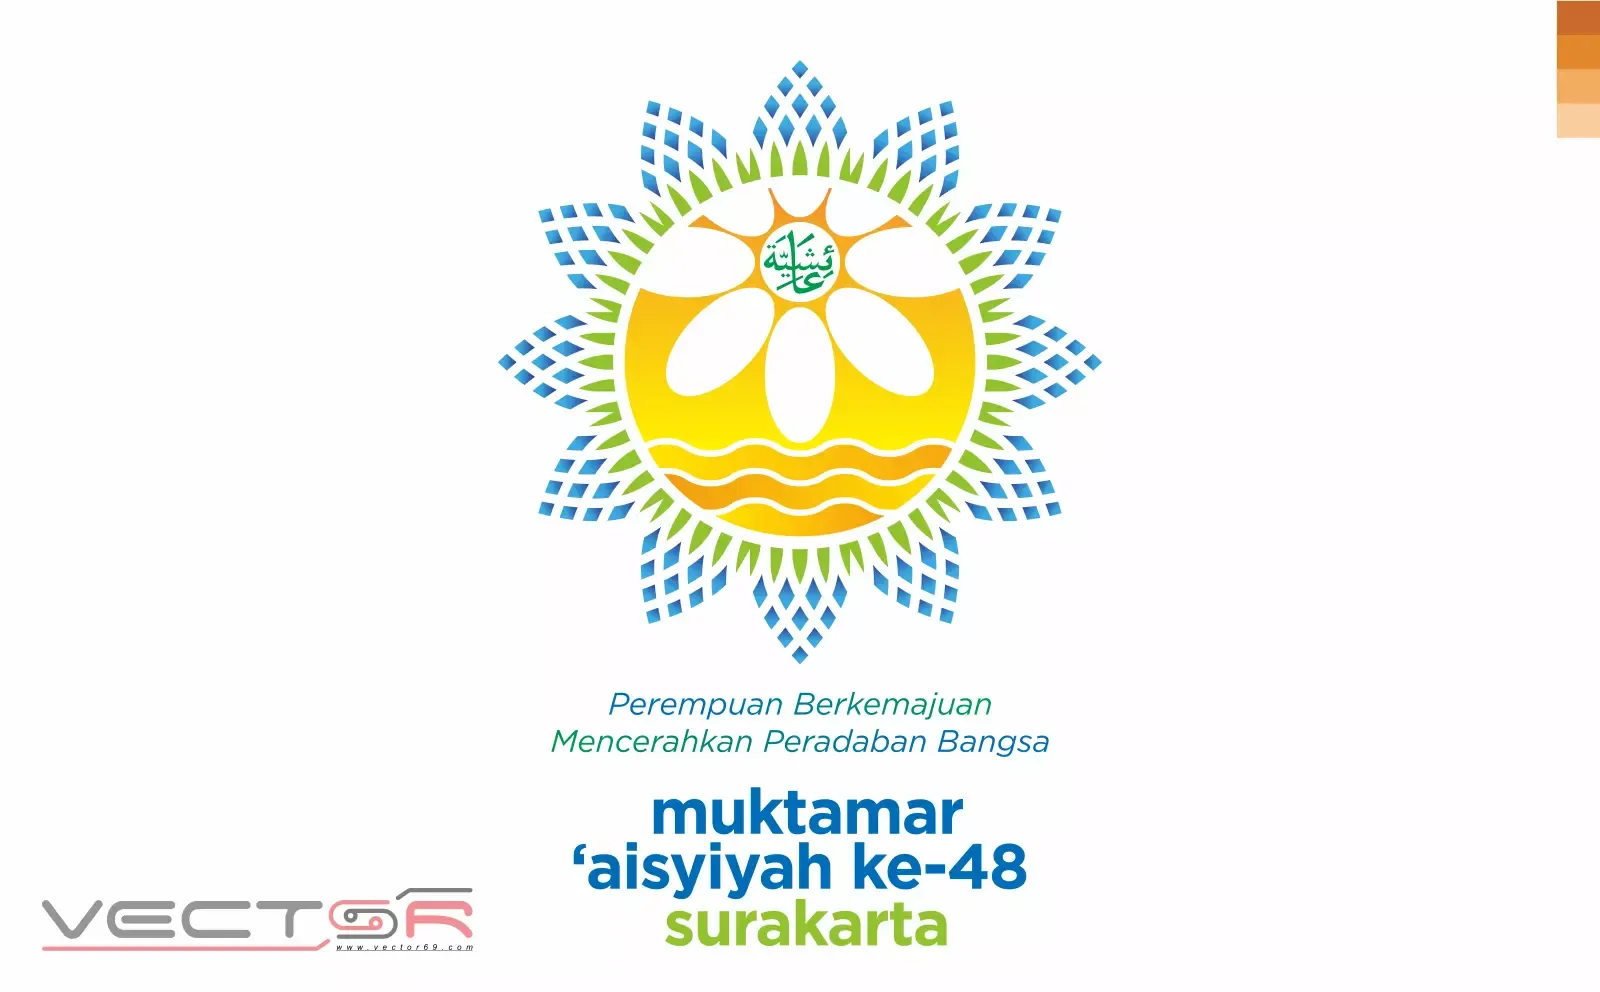 Muktamar 'Aisyiyah ke-48 Surakarta Logo - Download Vector File AI (Adobe Illustrator)